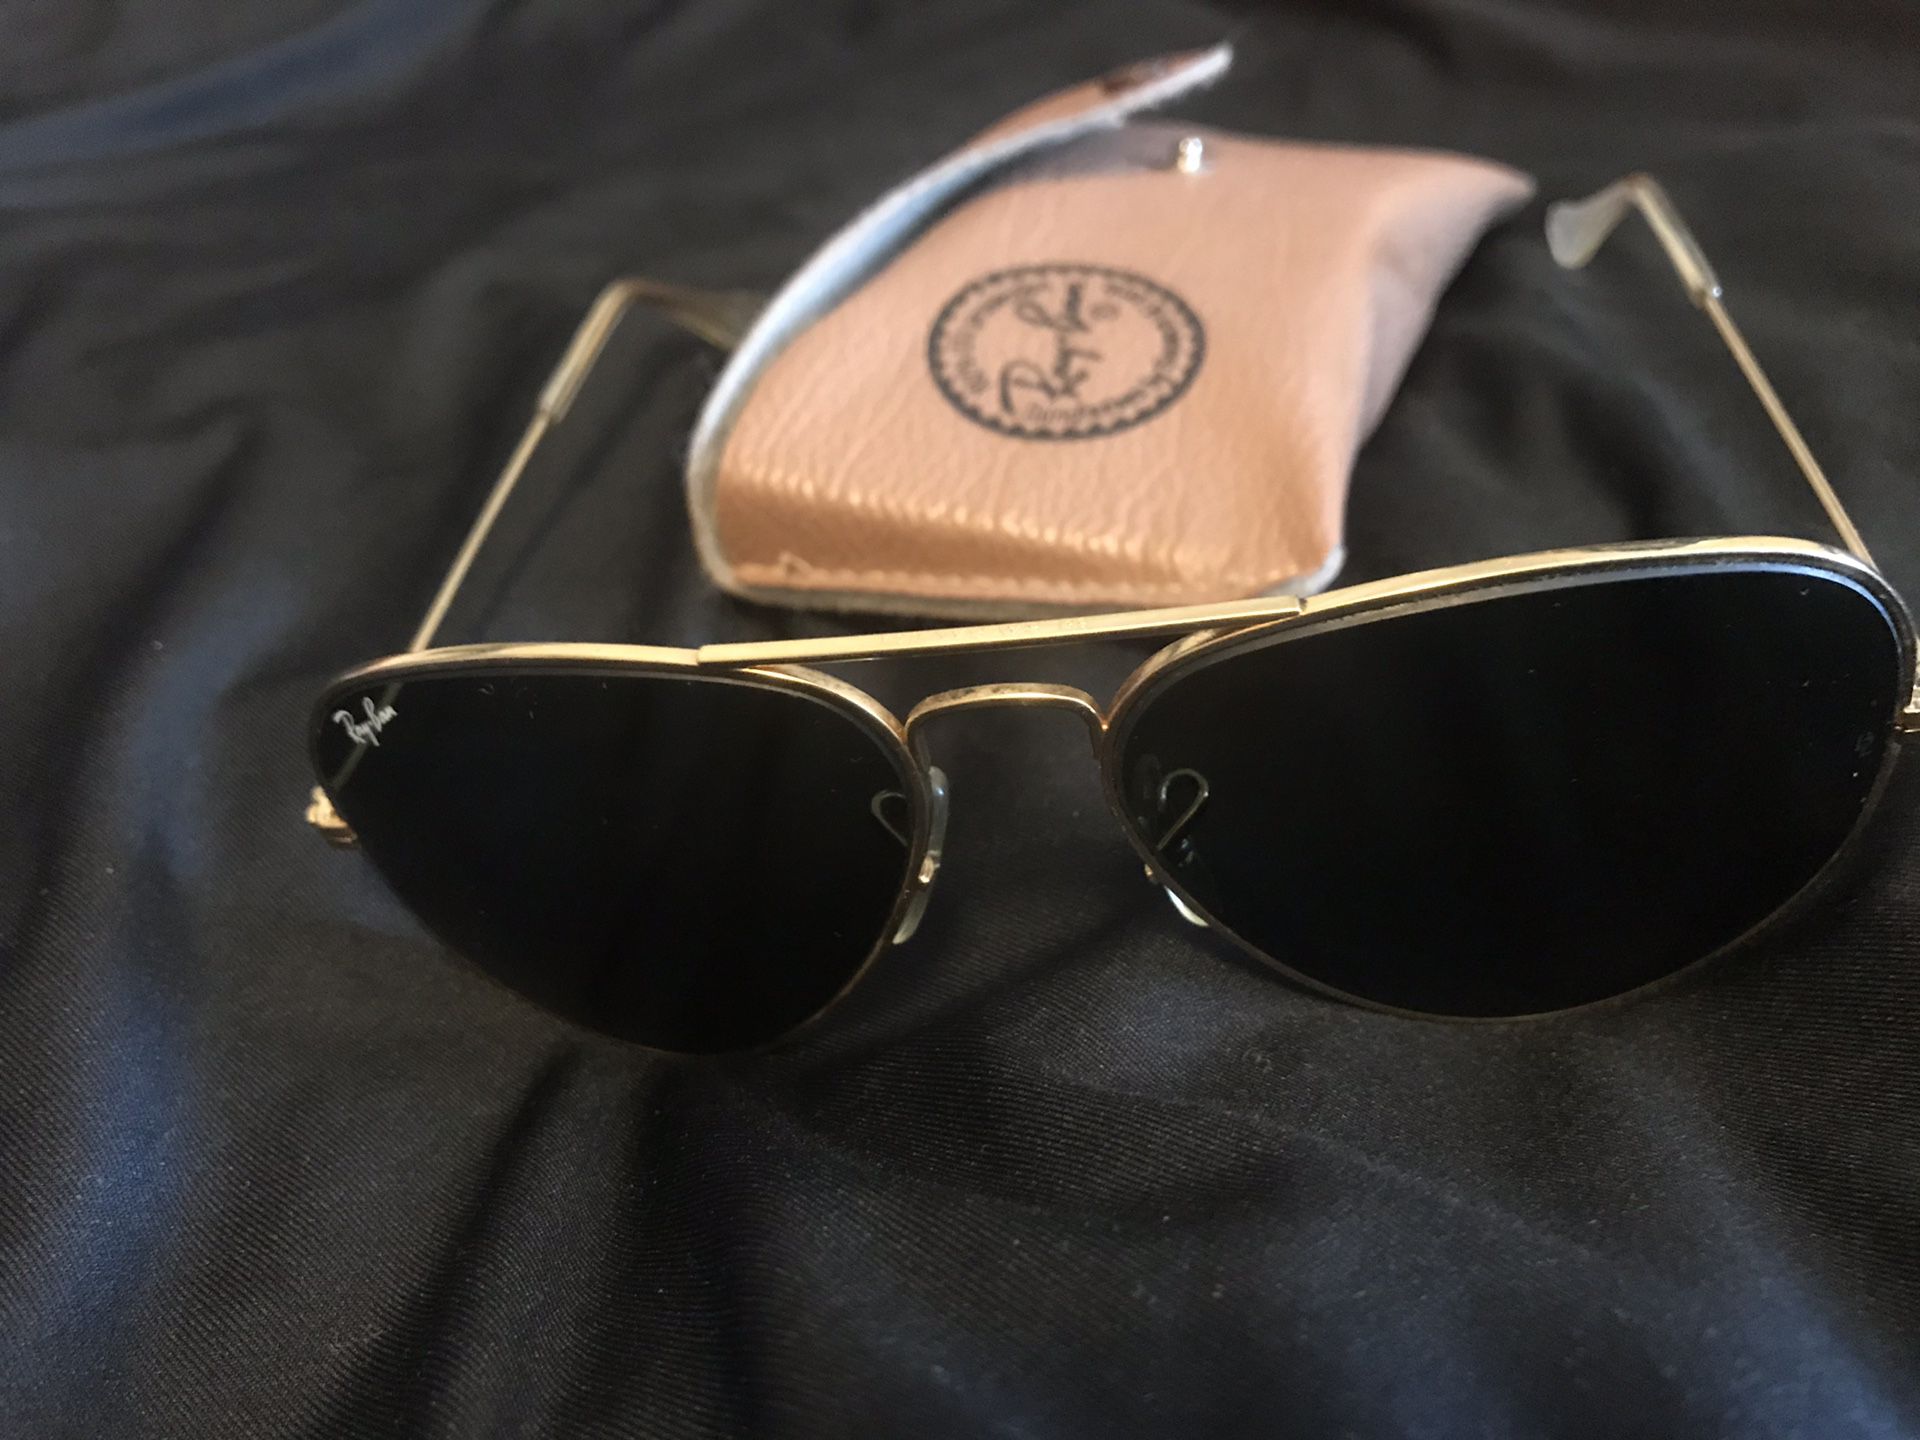 Rayban Ray Ban aviator Classic sunglasses W hard case like New no scratches